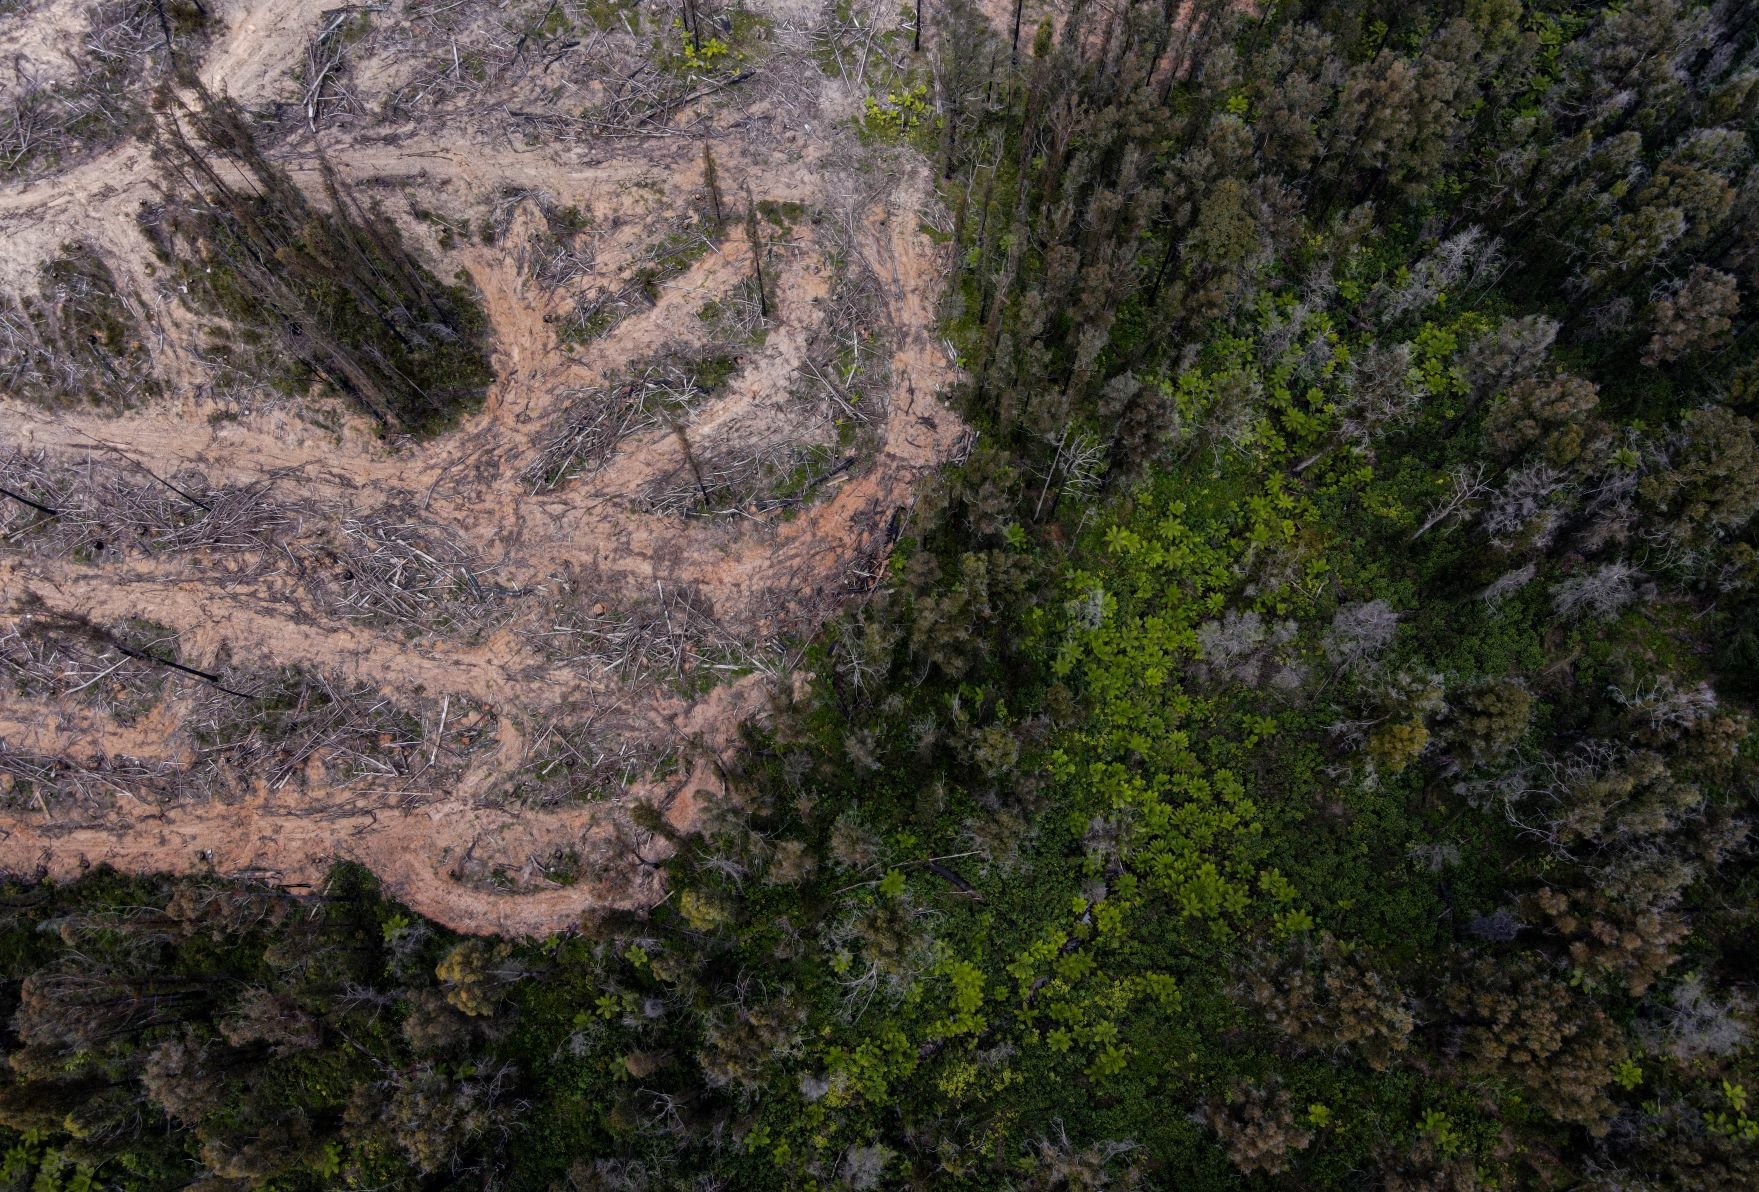  Tree ferns on the cusp of destruction as deforestation intrudes. 